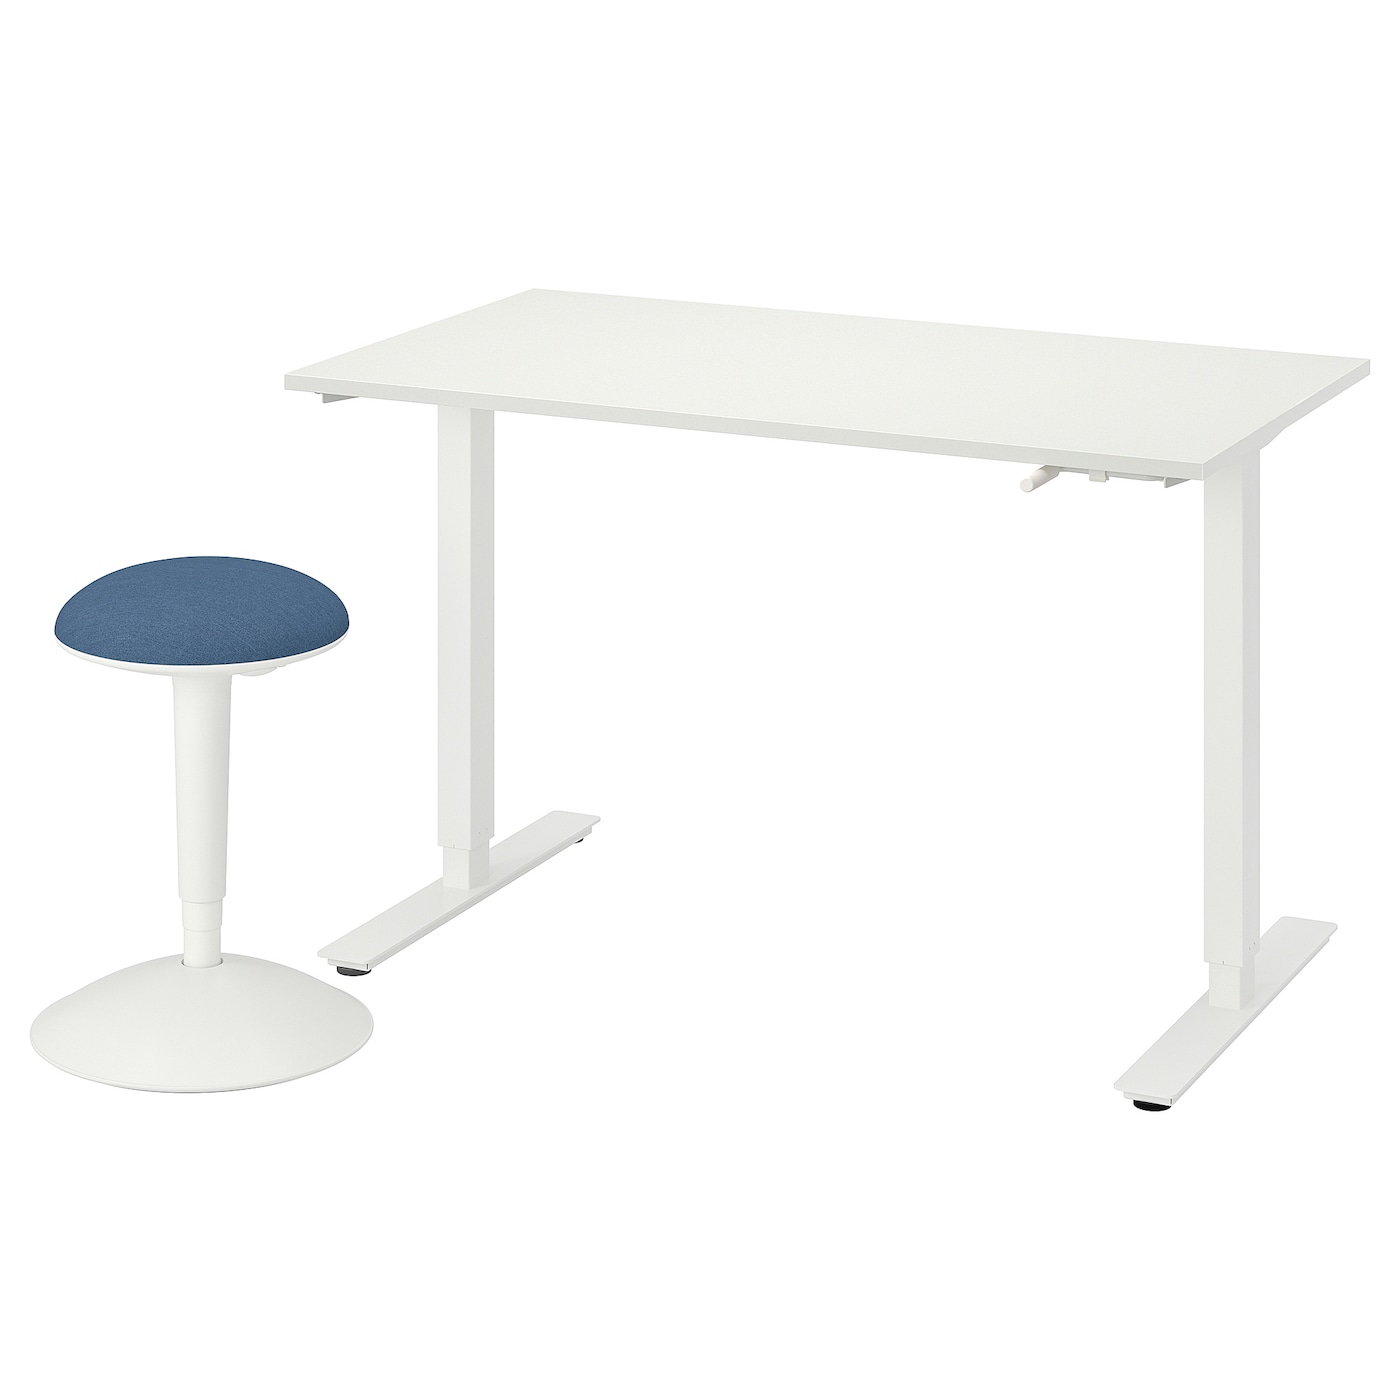 Комбинация: стол и табурет - IKEA TROTTEN/NILSERIK, 120х60 см, белый/темно-синий, ТРОТТЕН/НИЛЬС-ЭРИК/НИЛЬСЭРИК ИКЕА